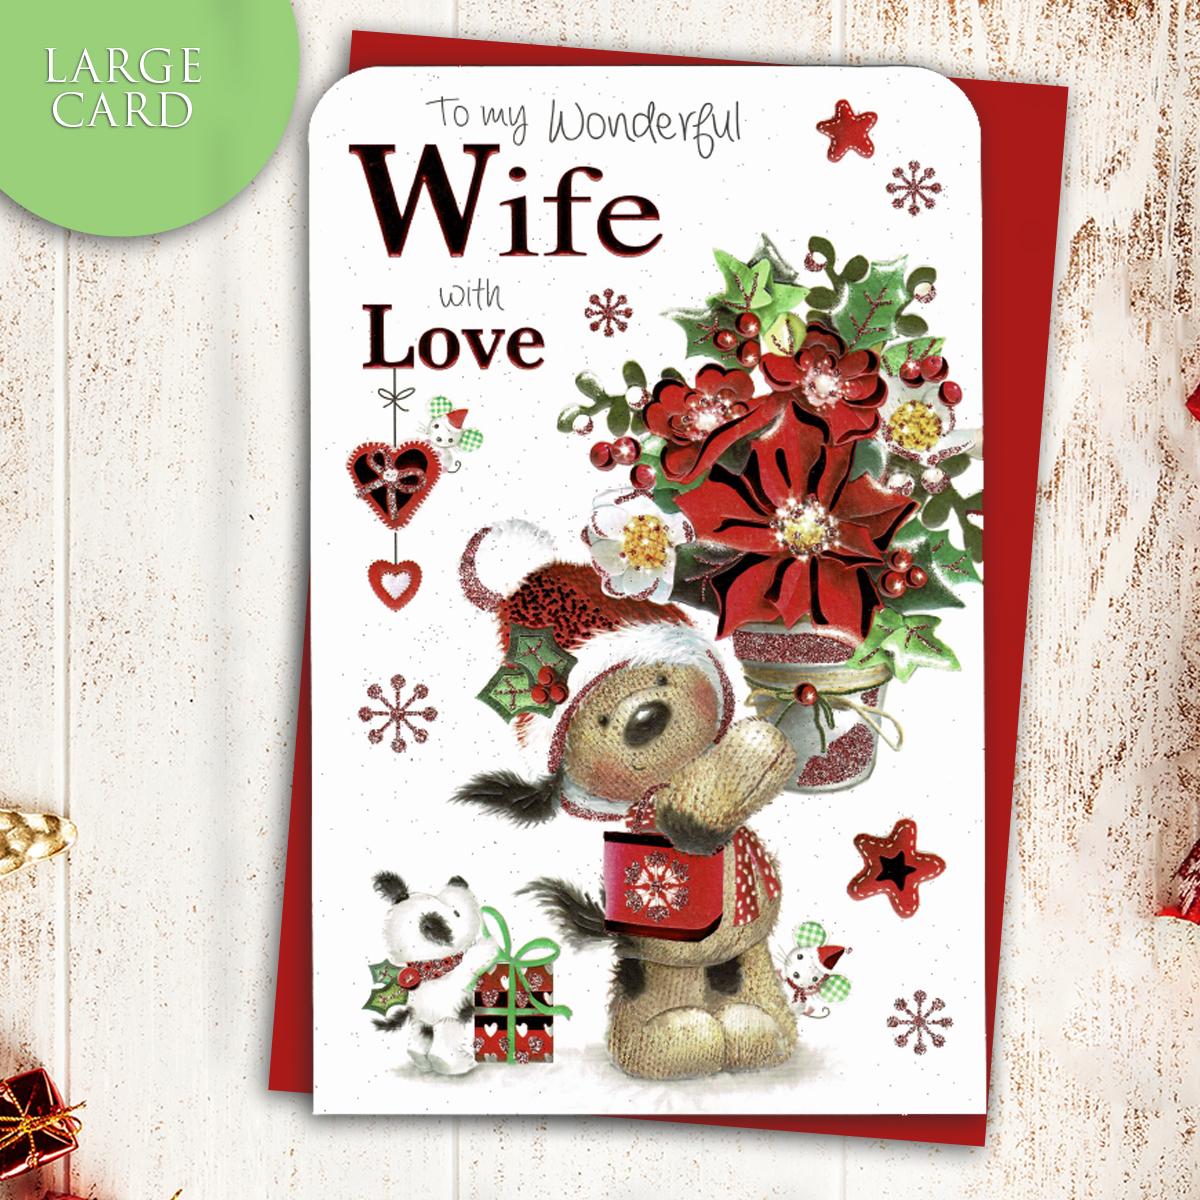 Wonderful Wife Christmas Card Alongside Its Red Envelope